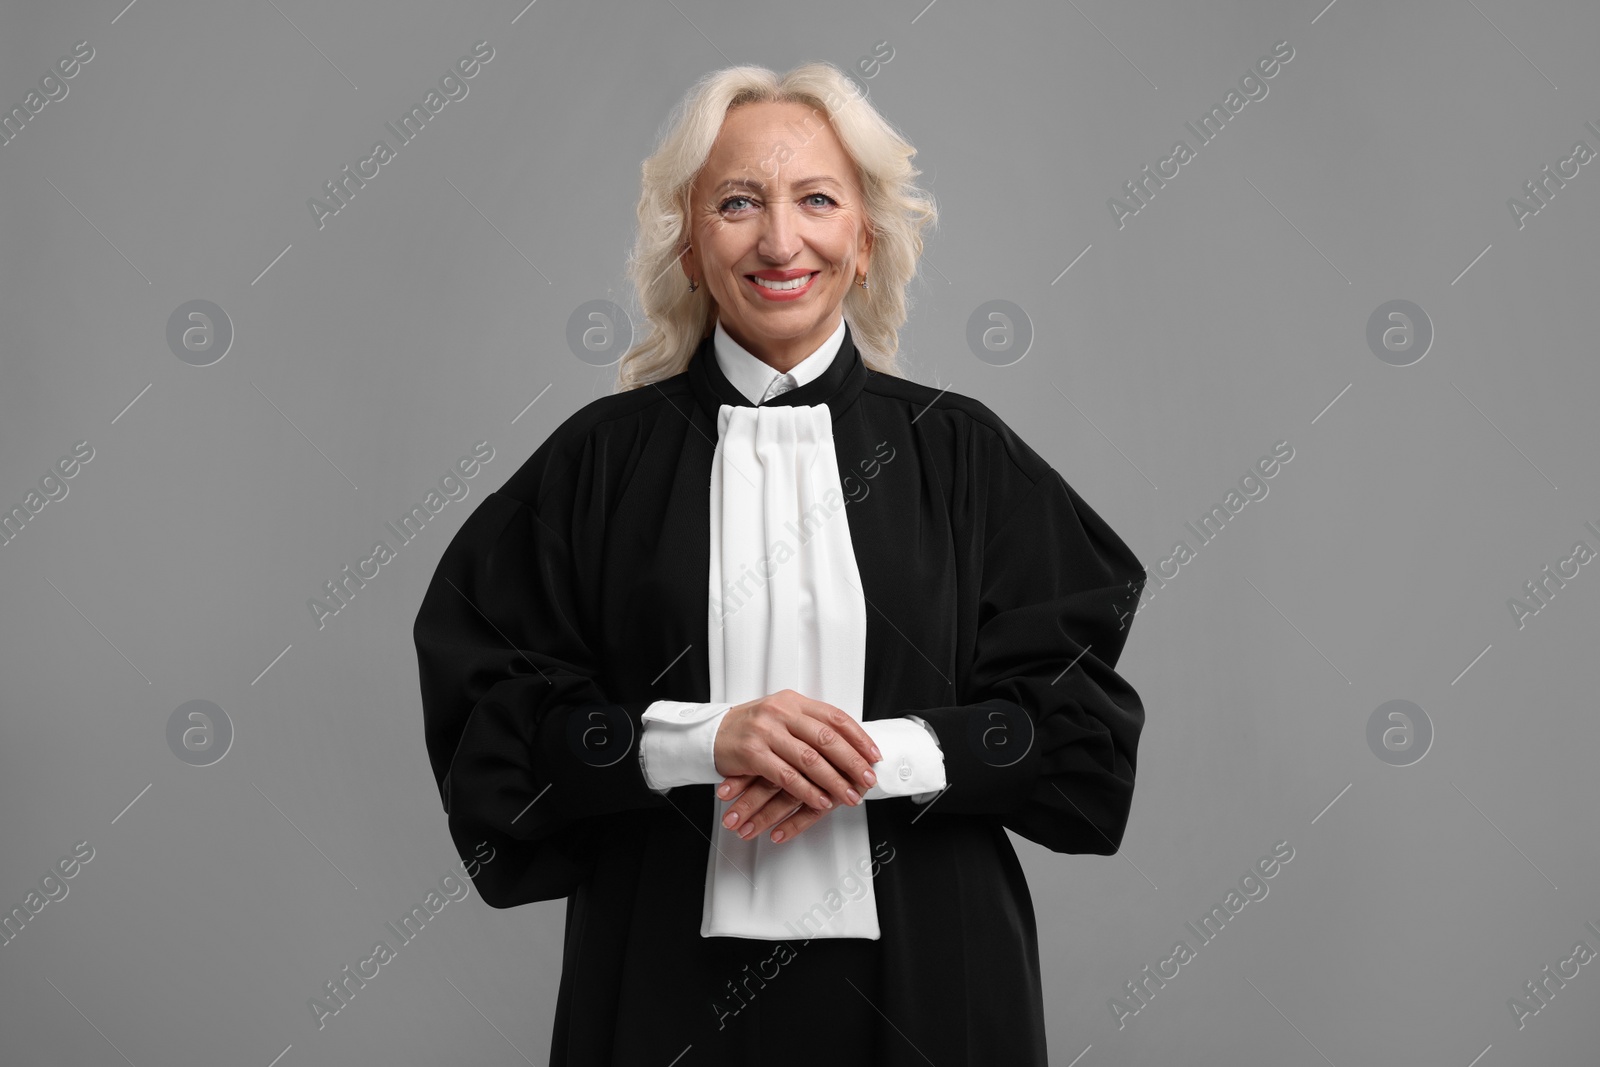 Photo of Smiling senior judge in court dress on grey background